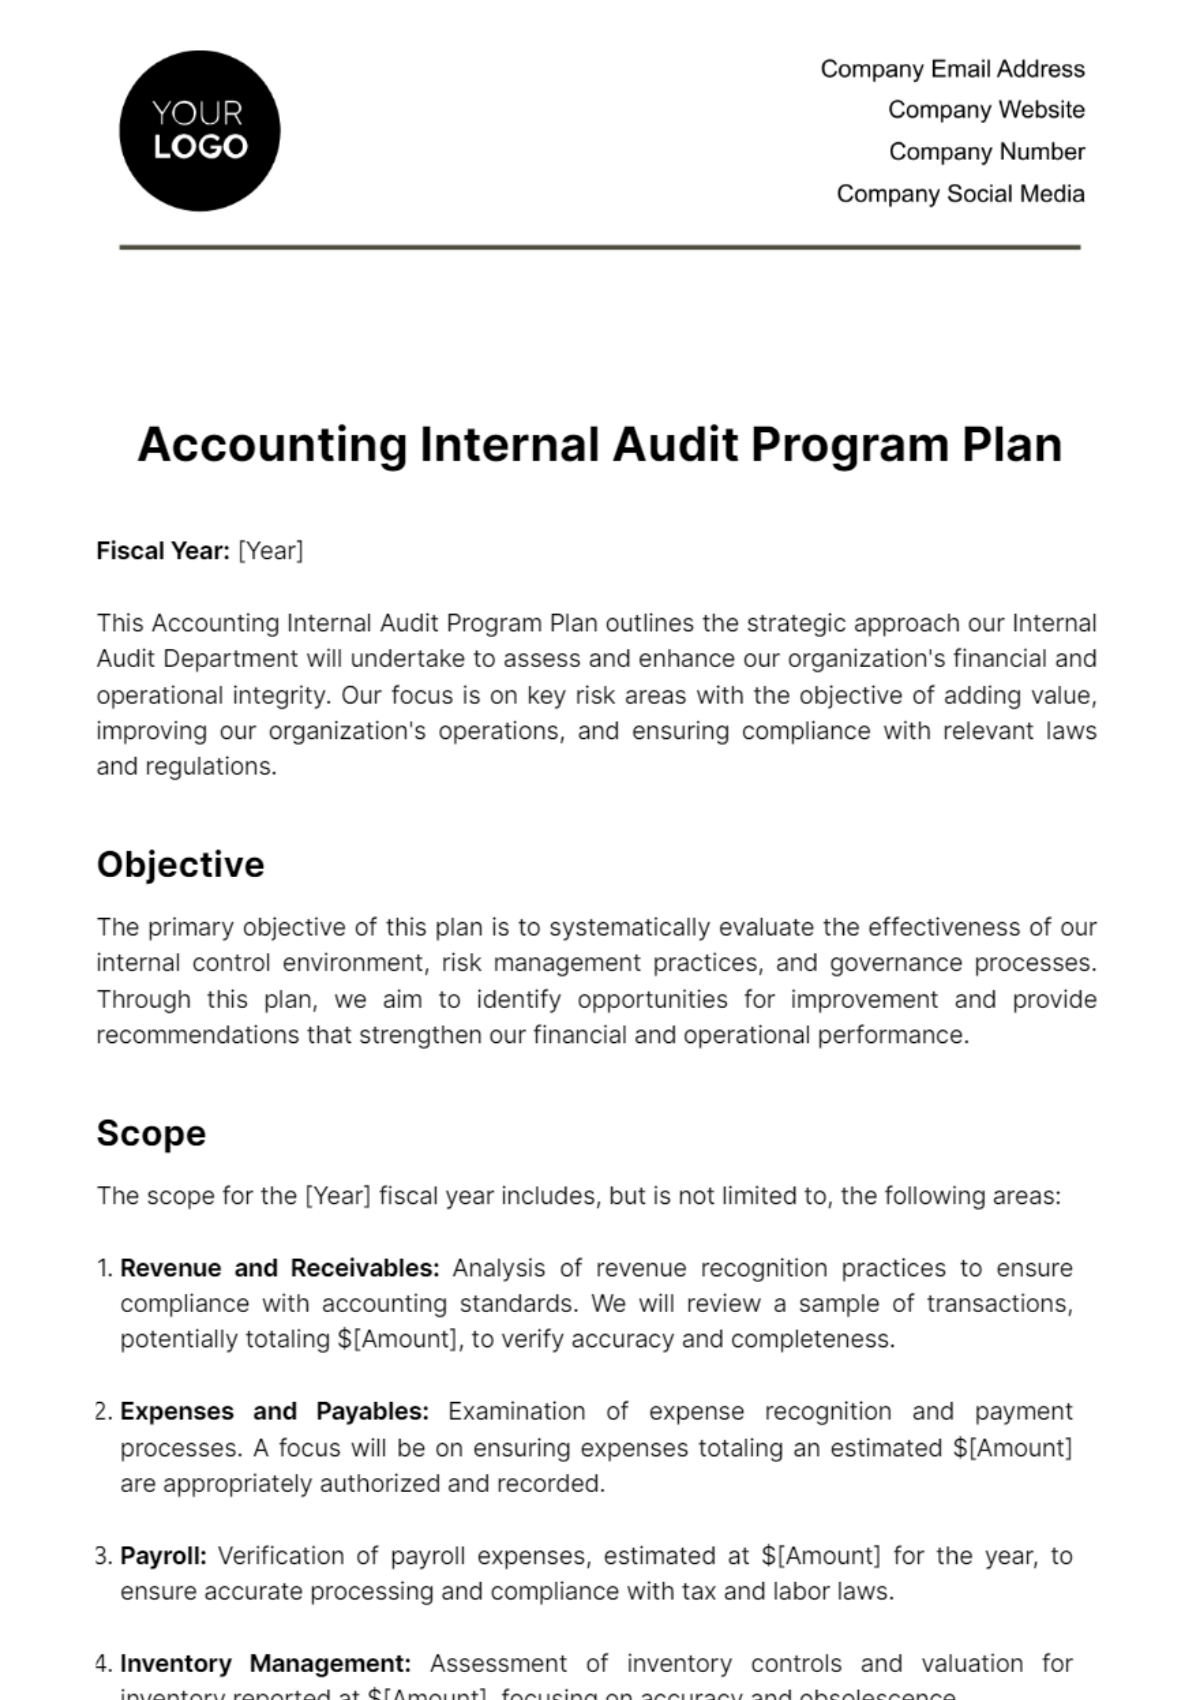 Accounting Internal Audit Program Plan Template